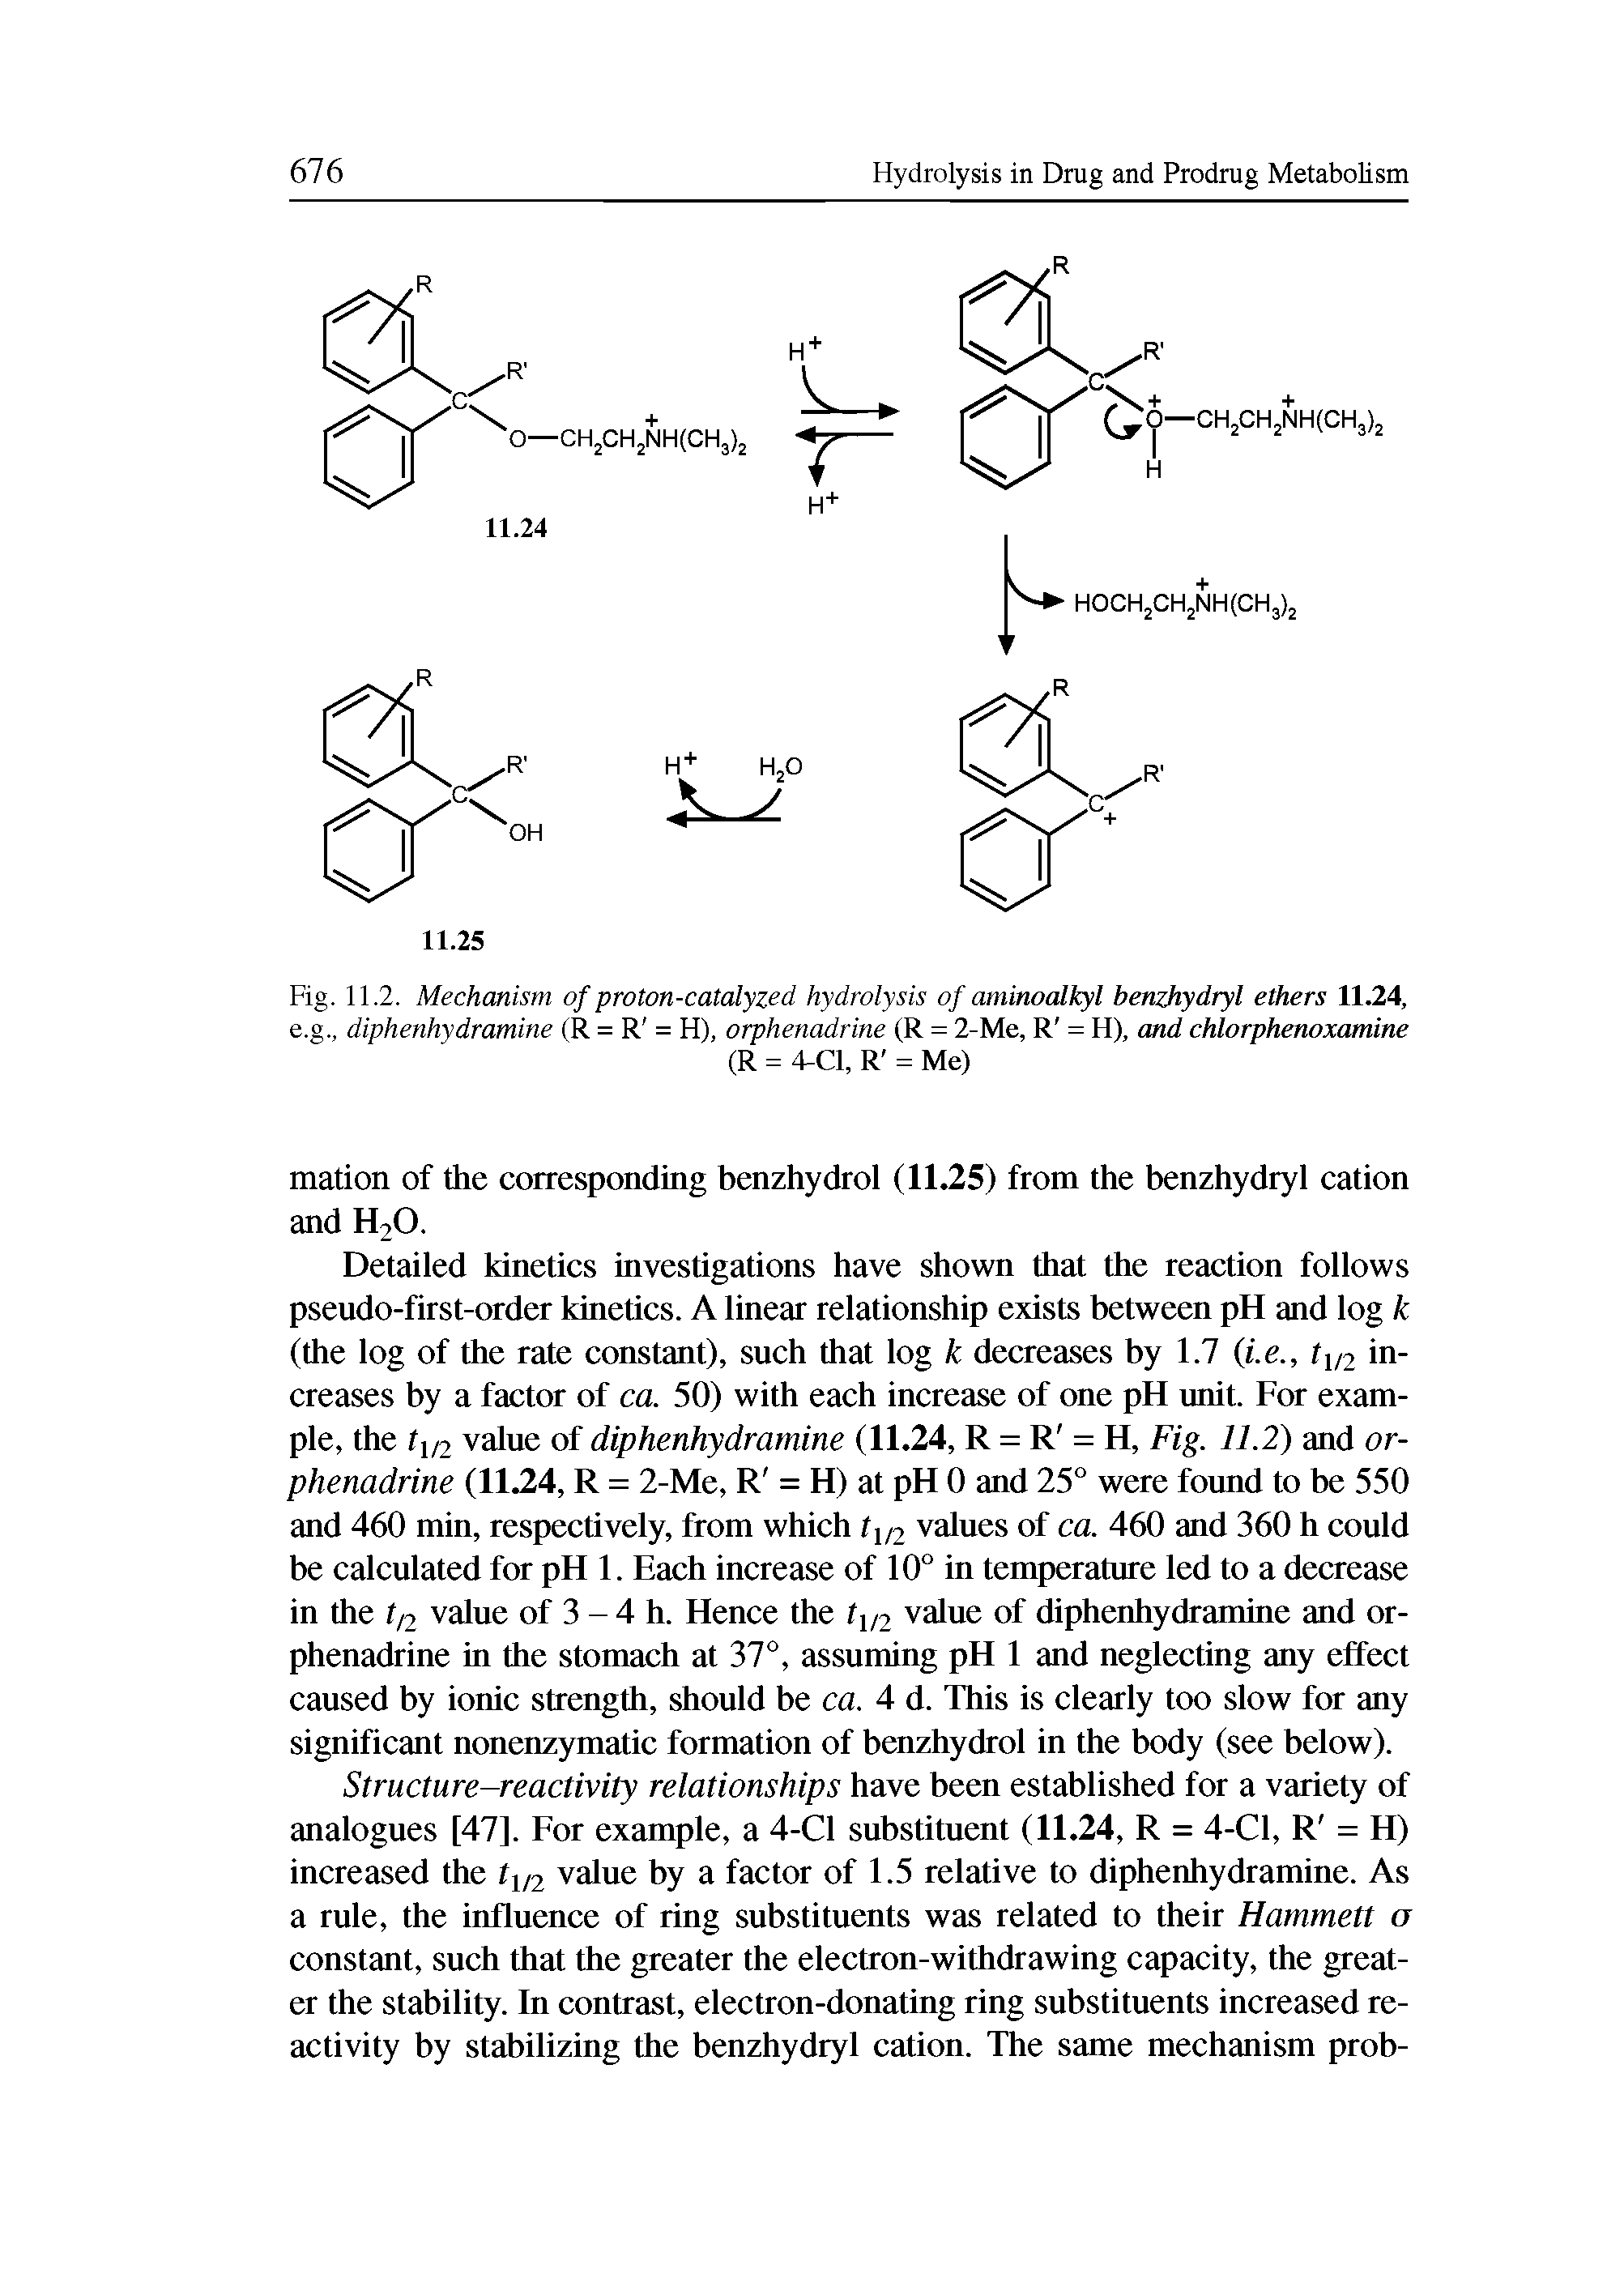 Fig. 11.2. Mechanism of proton-catalyzed, hydrolysis of aminoalkyl benzhydryl ethers 11.24, e.g., diphenhydramine (R = R = H), orphenadrine (R = 2-Me, R = H), and chlorphenoxamine...